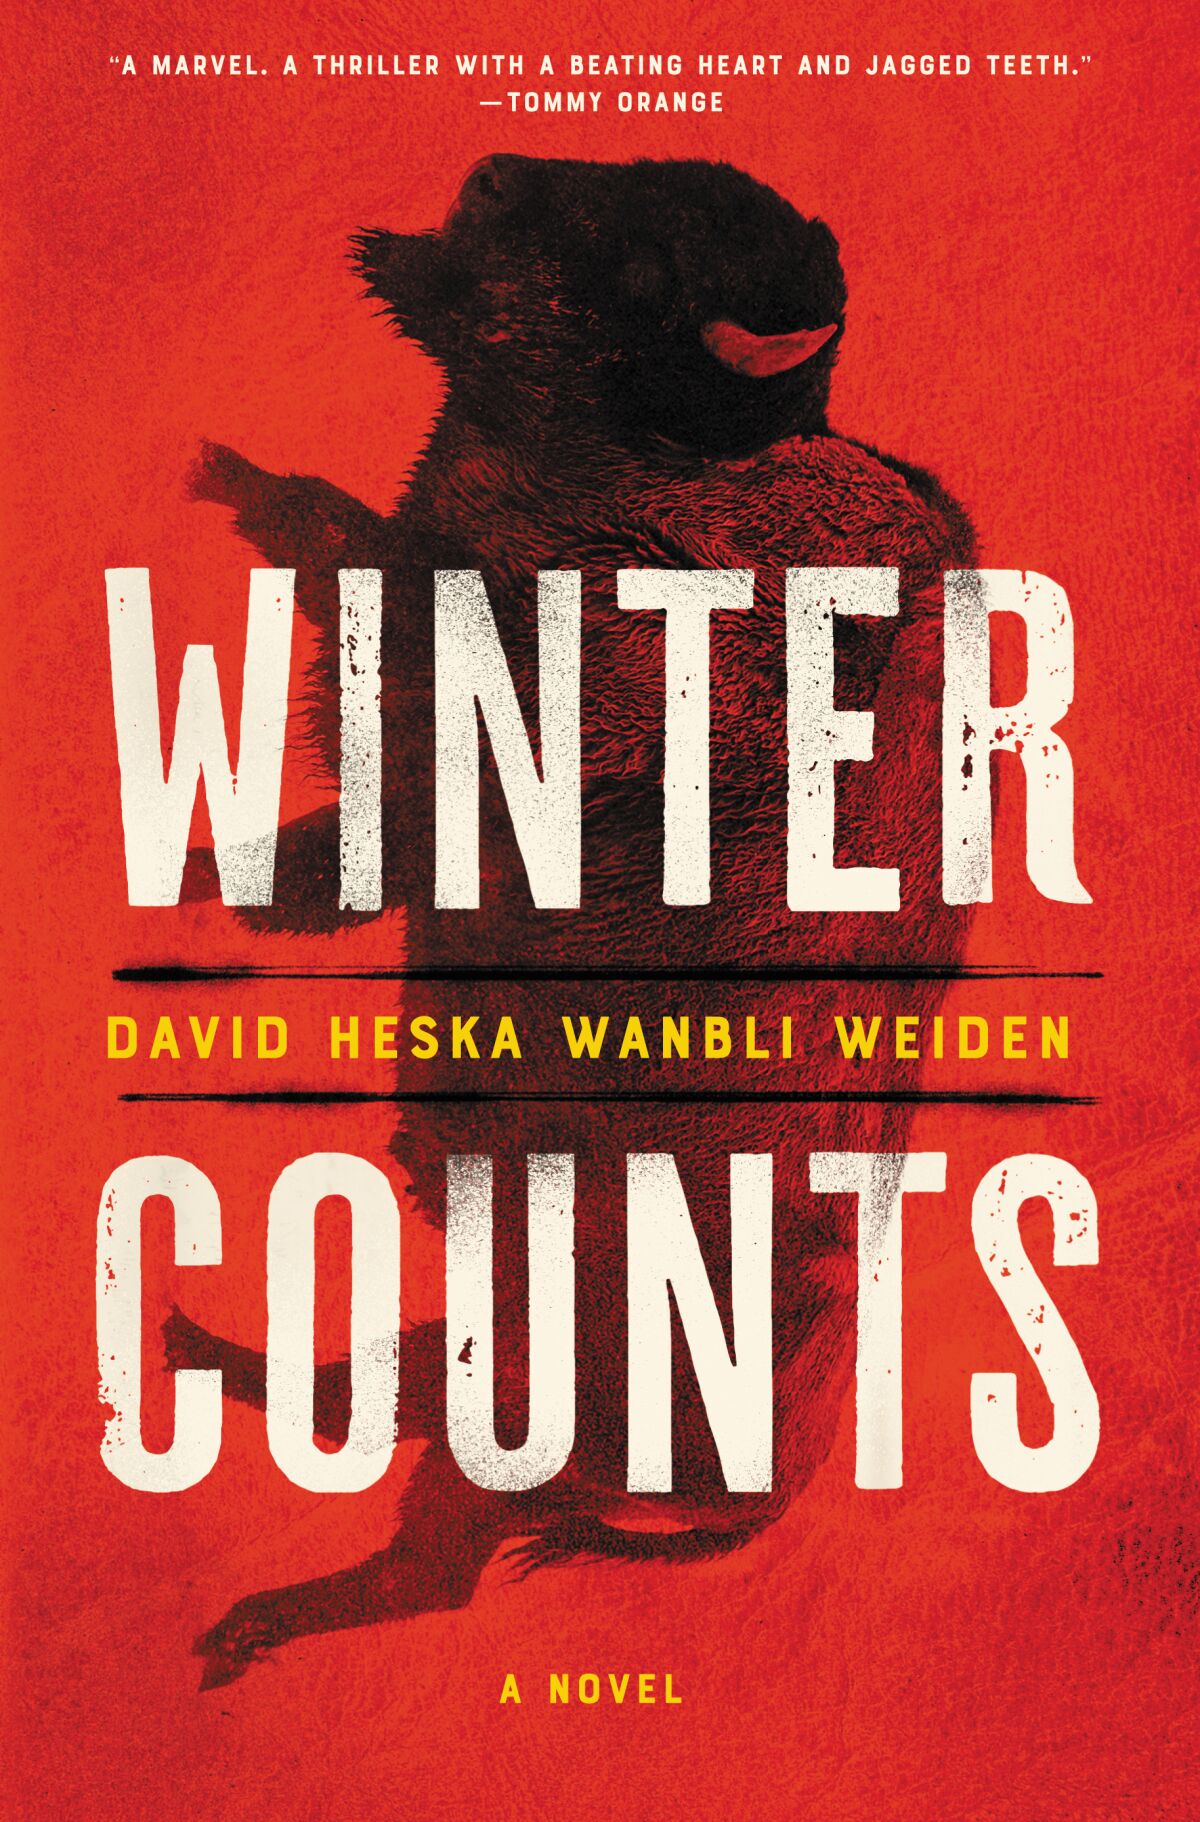 A book jacket for "Winter Counts," by David Heska Wanbli Weiden. Credit: Ecco